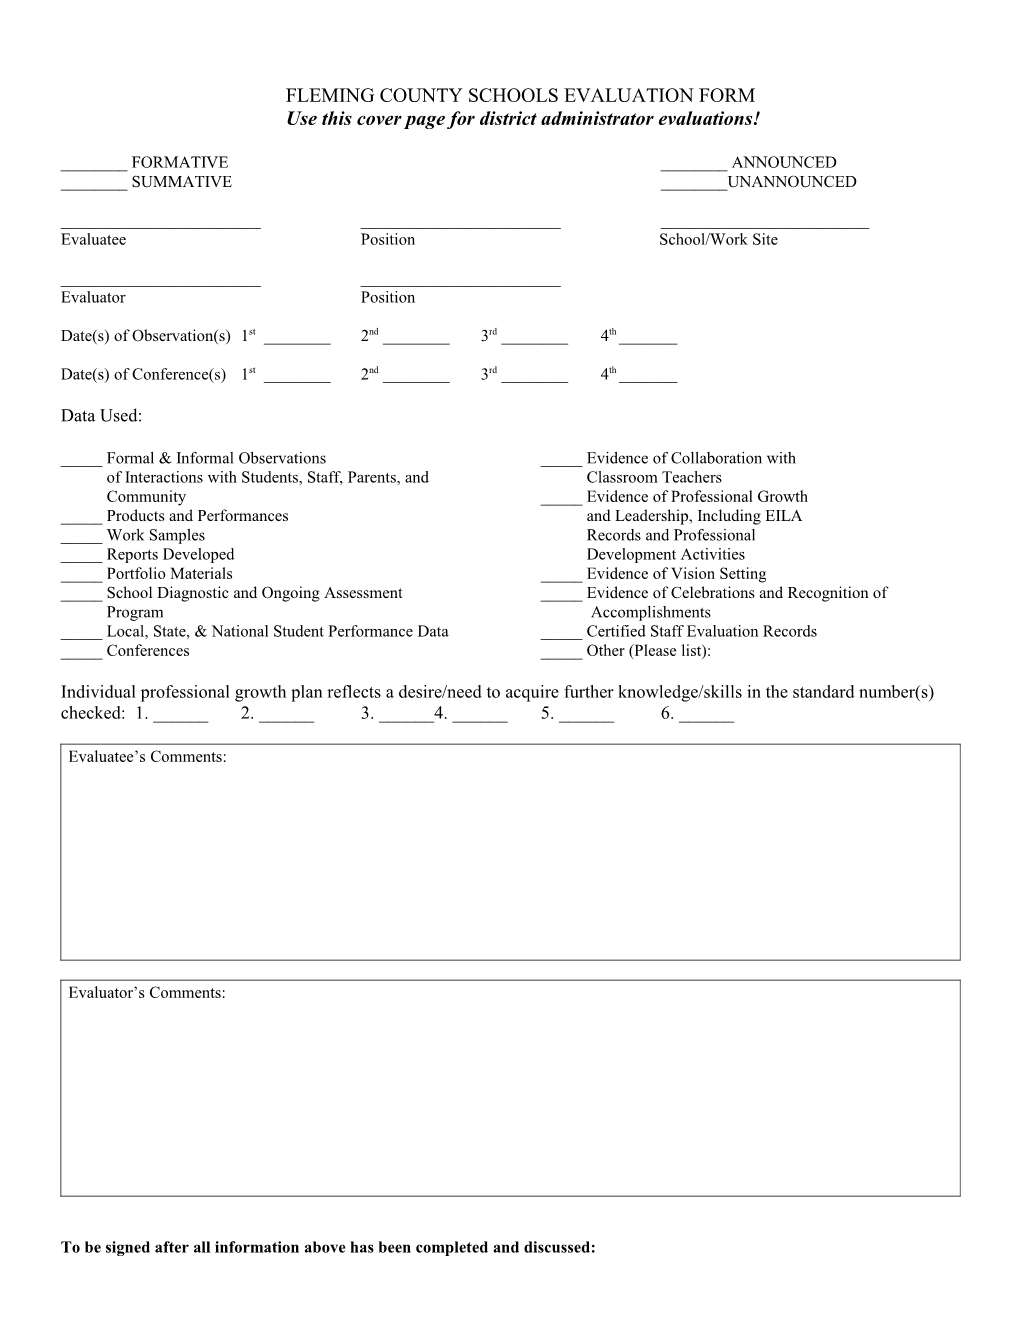 Fleming County Schools Evaluation Form